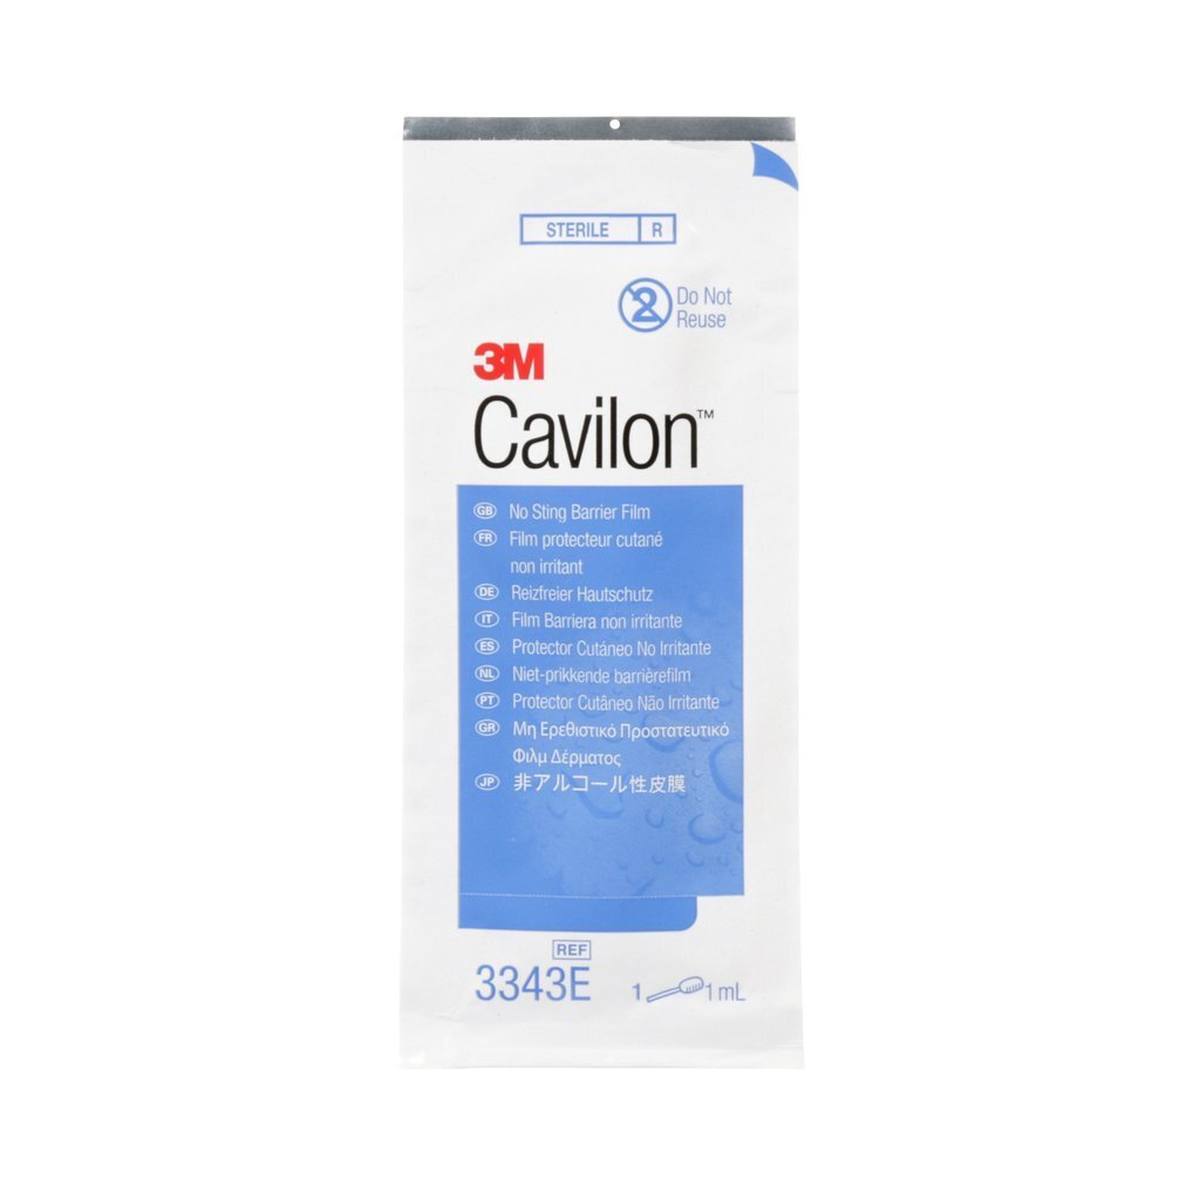 3M Cavilon non-irritant skin protection 3343E, 1 ml foam applicator